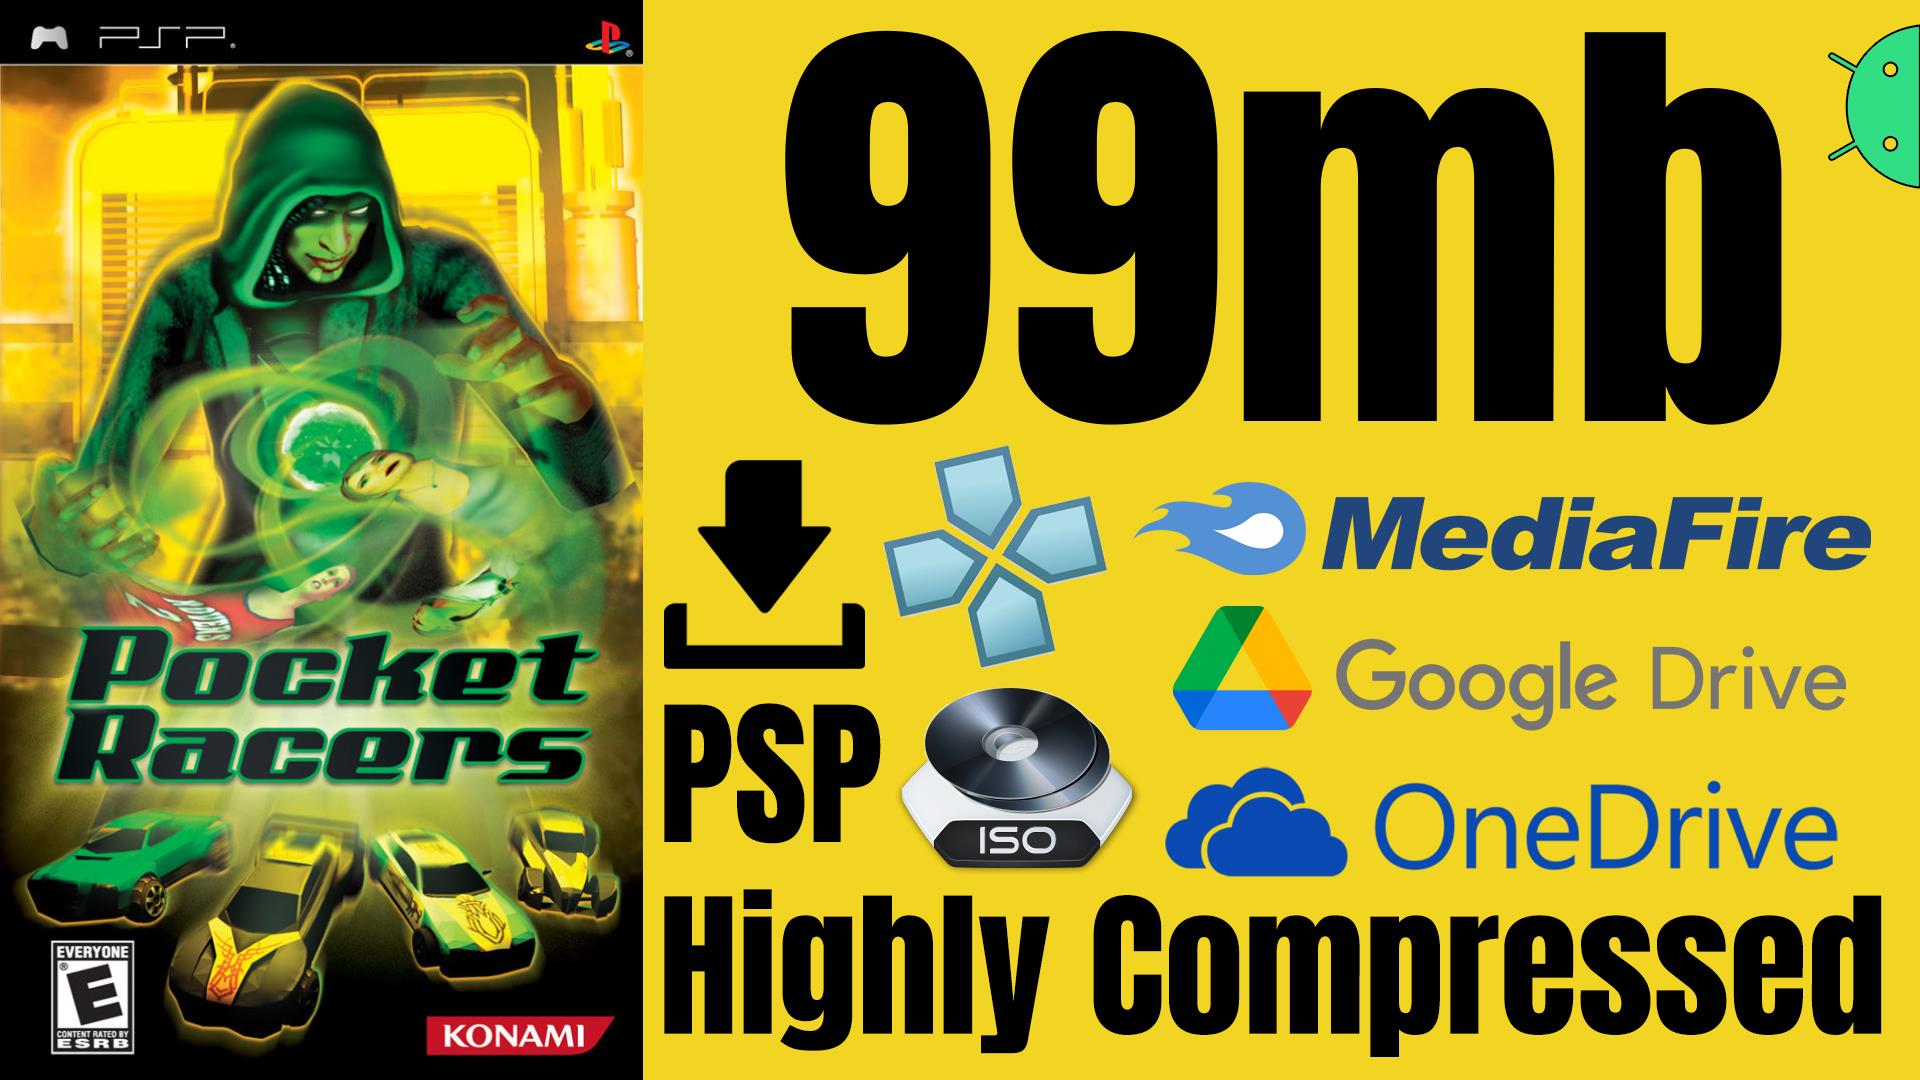 Pocket Racers PSP ISO Highly Compressed Game Download